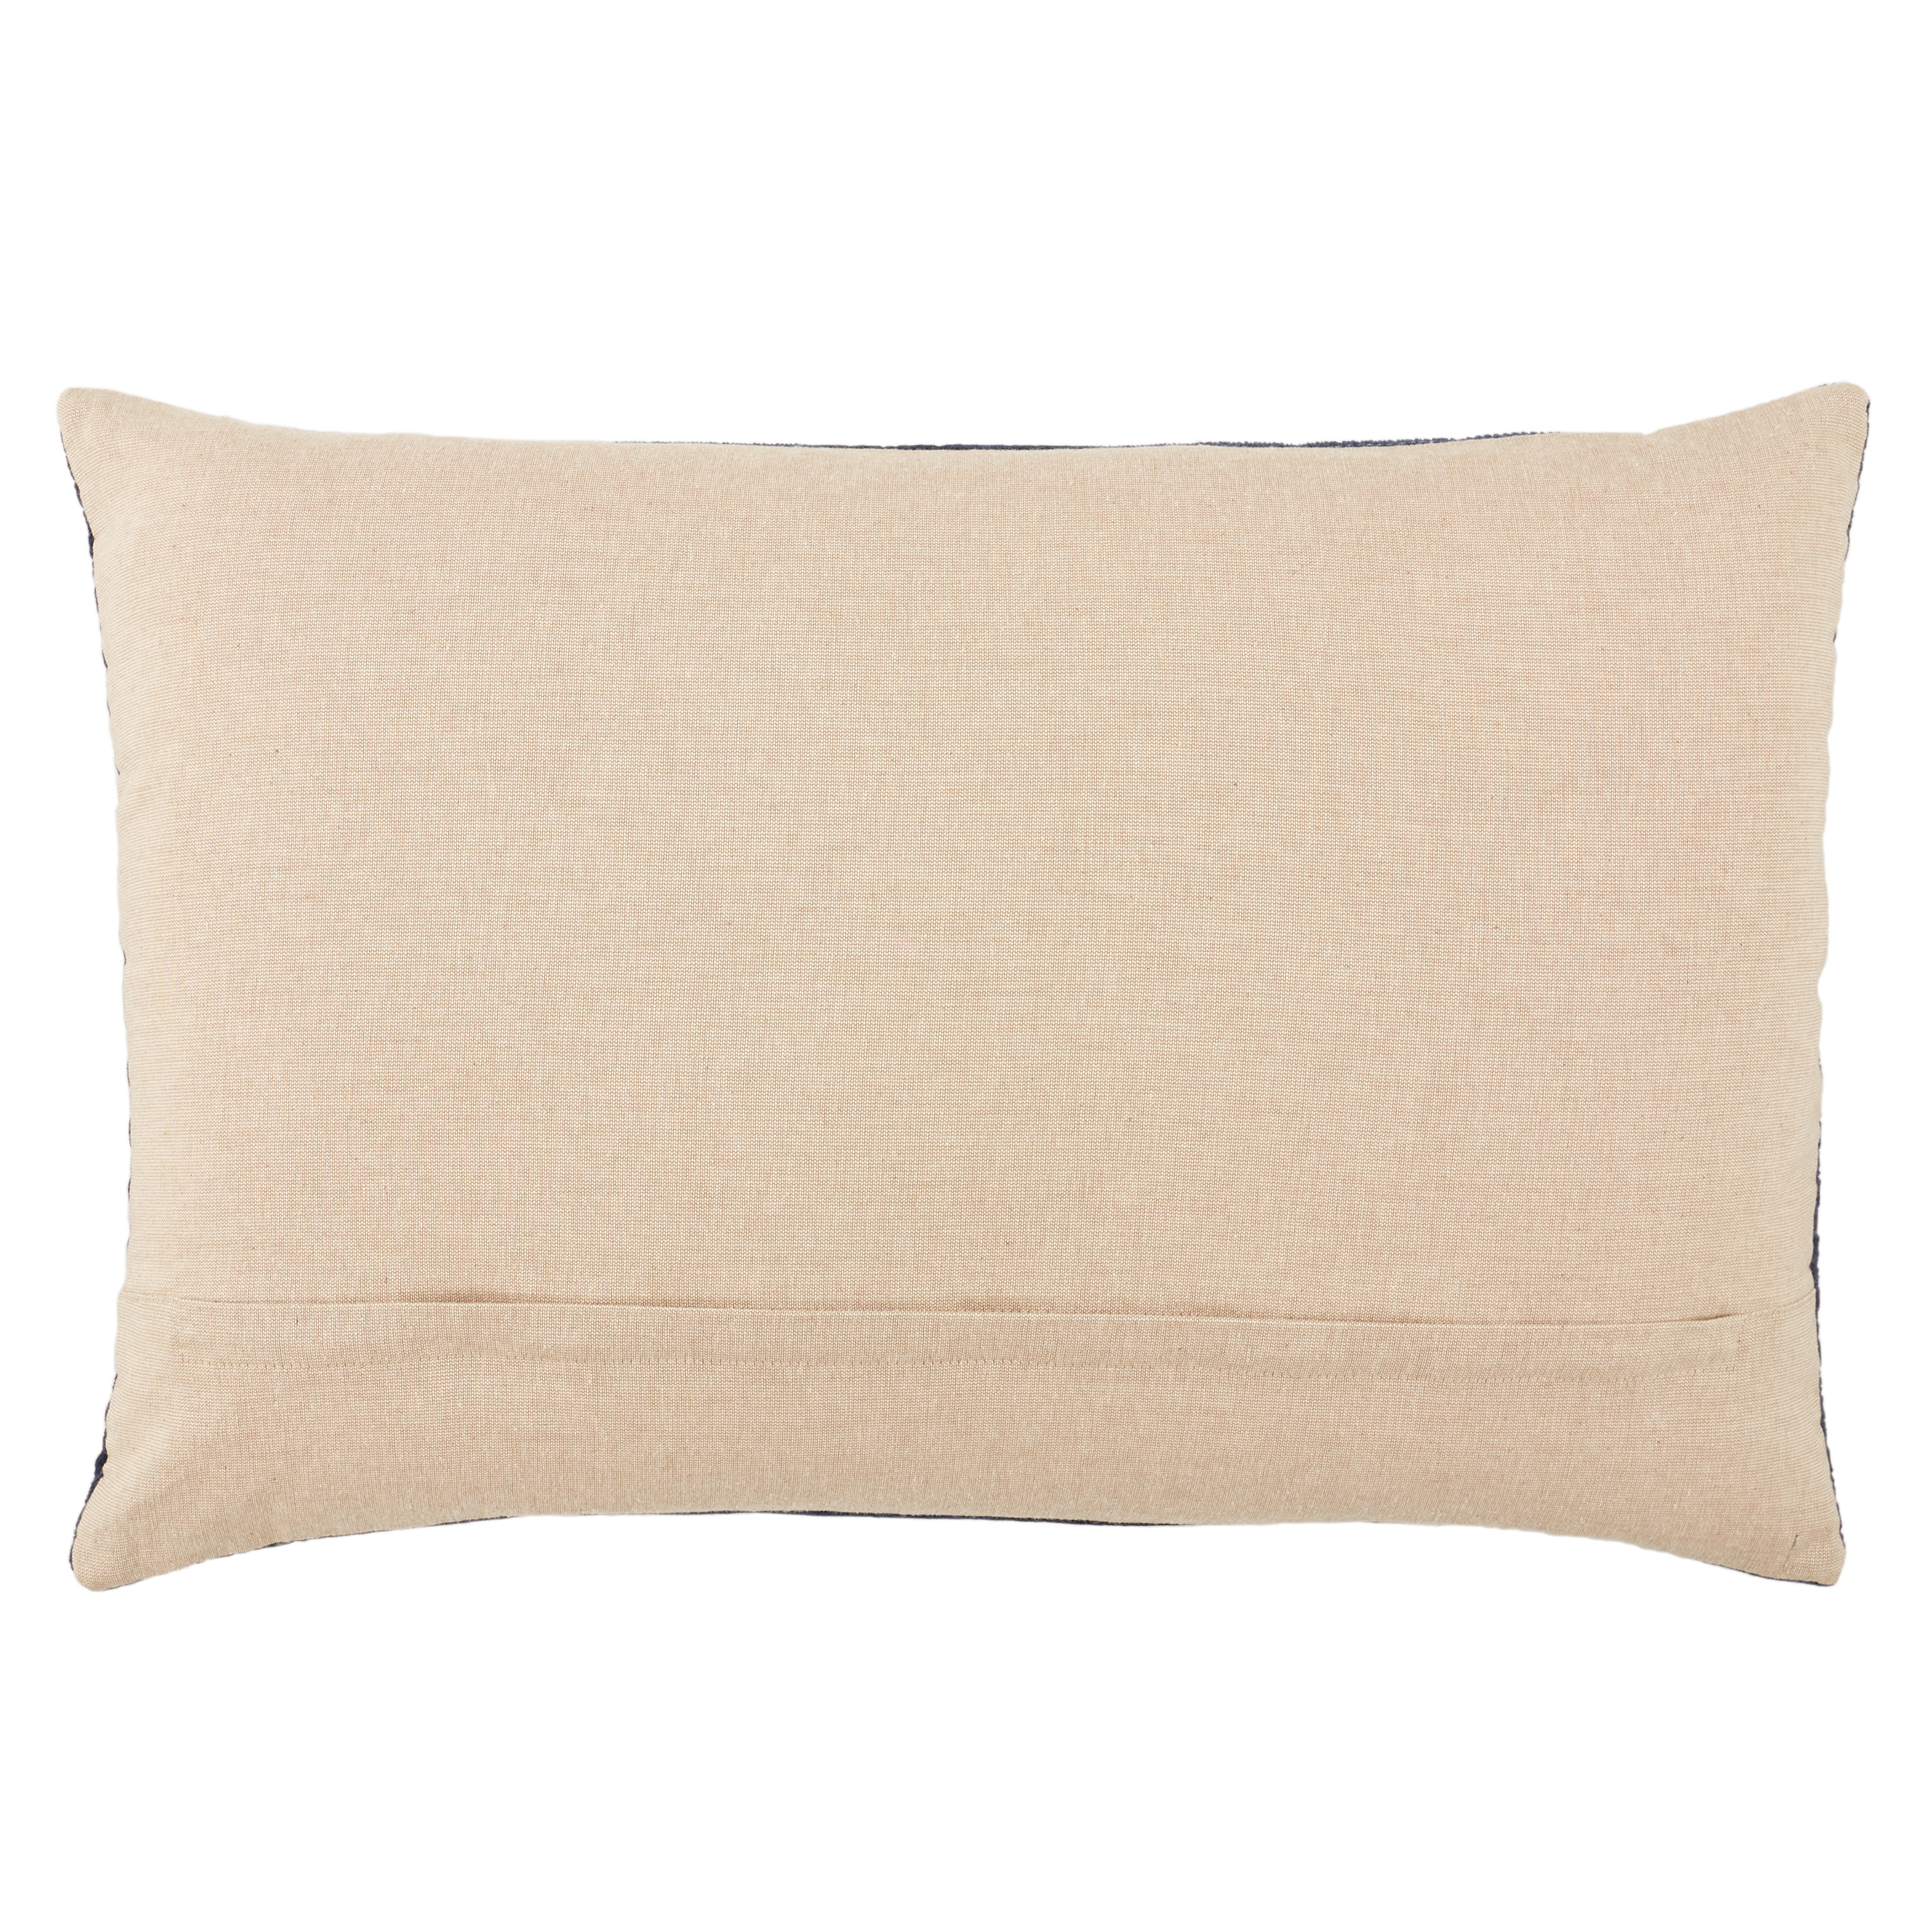 Deco Embroidered Lumbar Pillow, Gray, 24" x 16" - Image 1